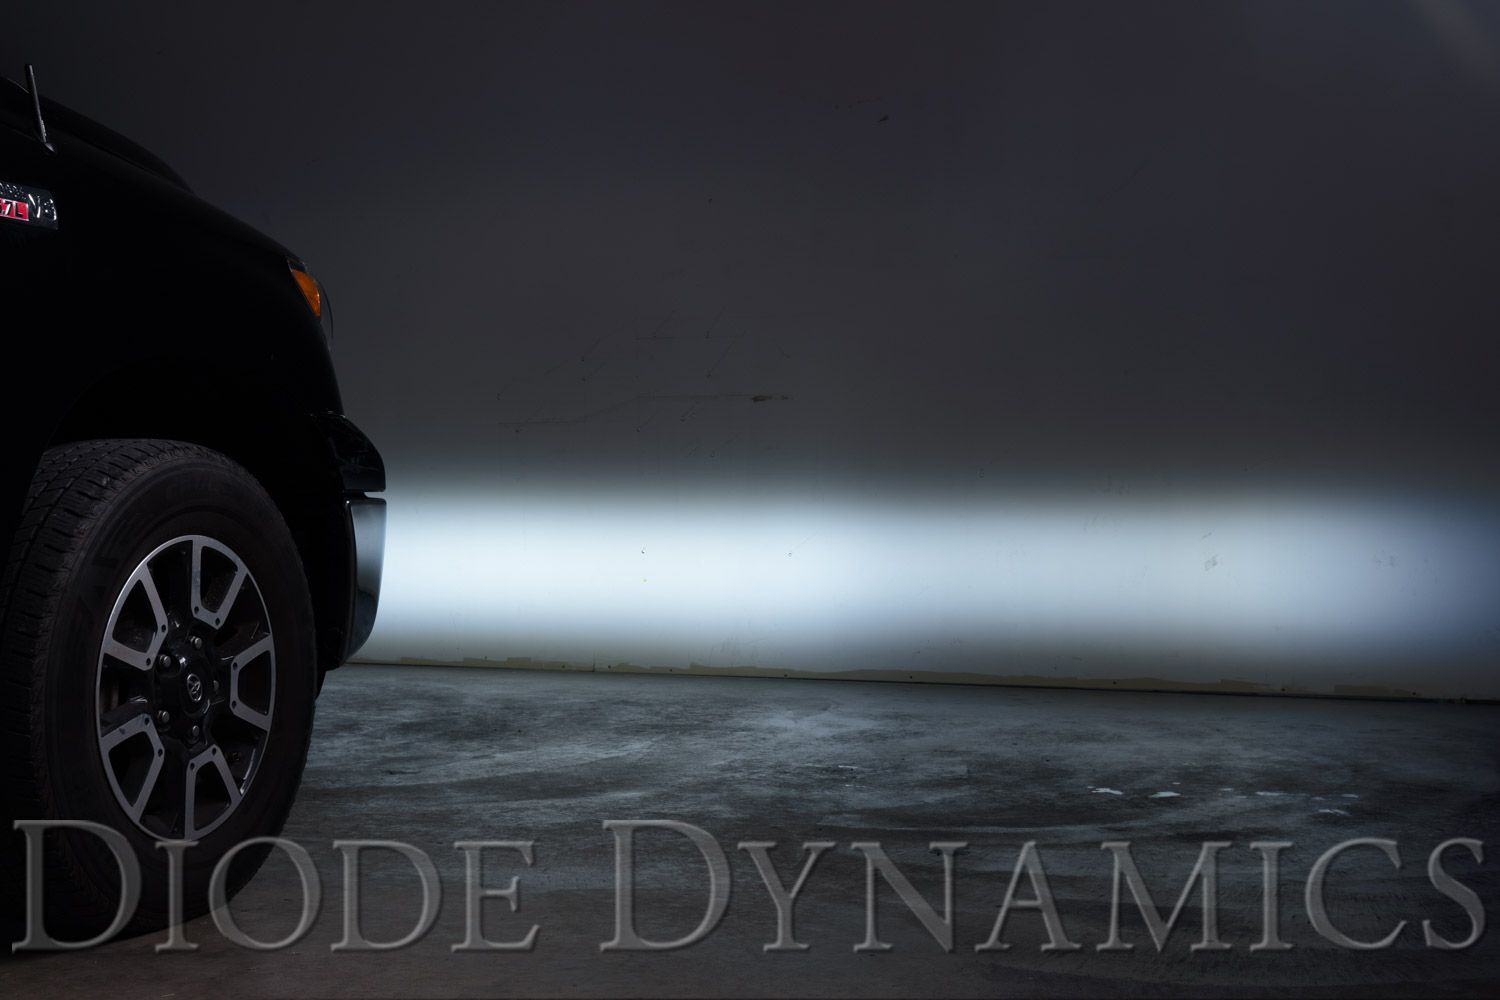 SS3 LED Fog Light Kit for 2007-2013 Toyota Tundra Diode Dynamics-